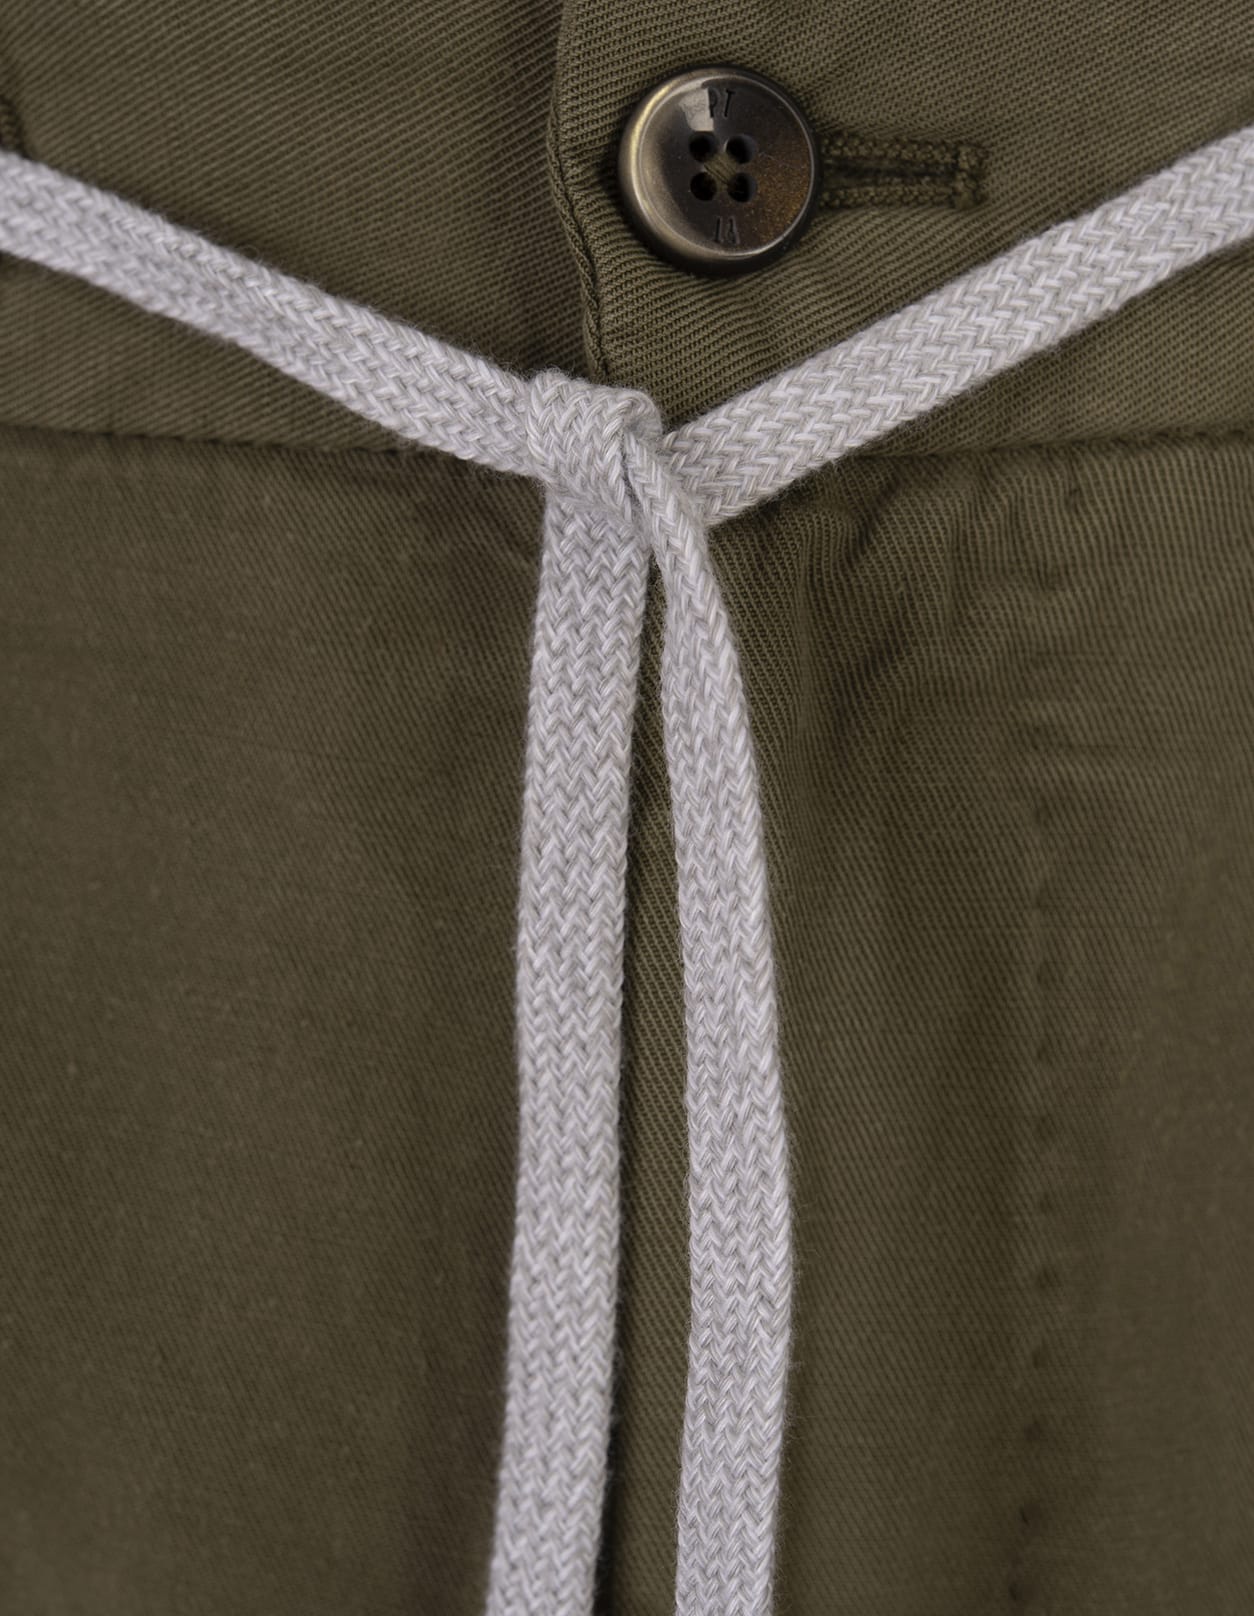 Shop Pt01 Military Green Linen Blend Soft Fit Trousers